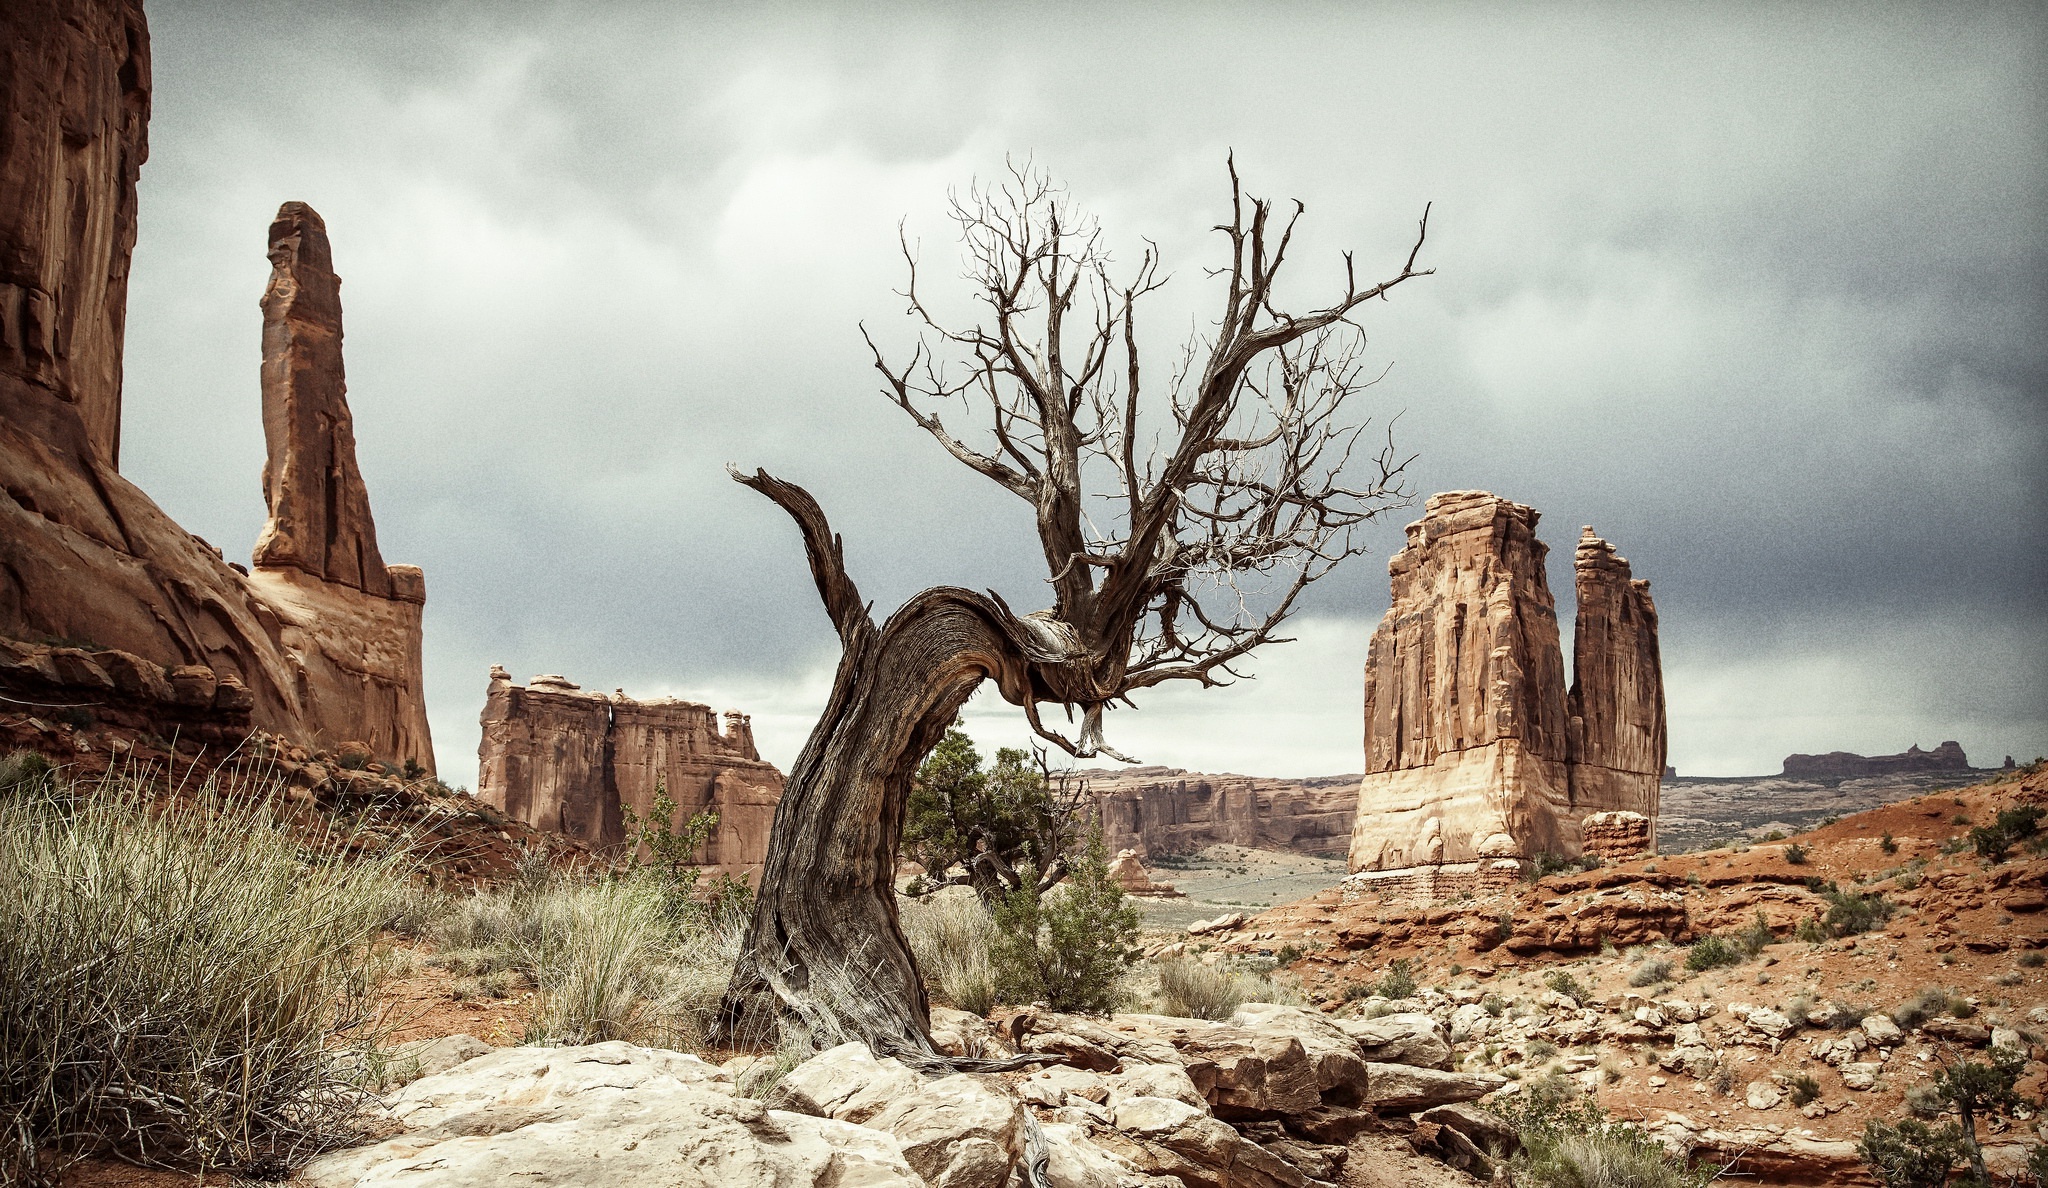 General 2048x1188 USA Utah landscape rocks nature desert overcast rock formation dead trees